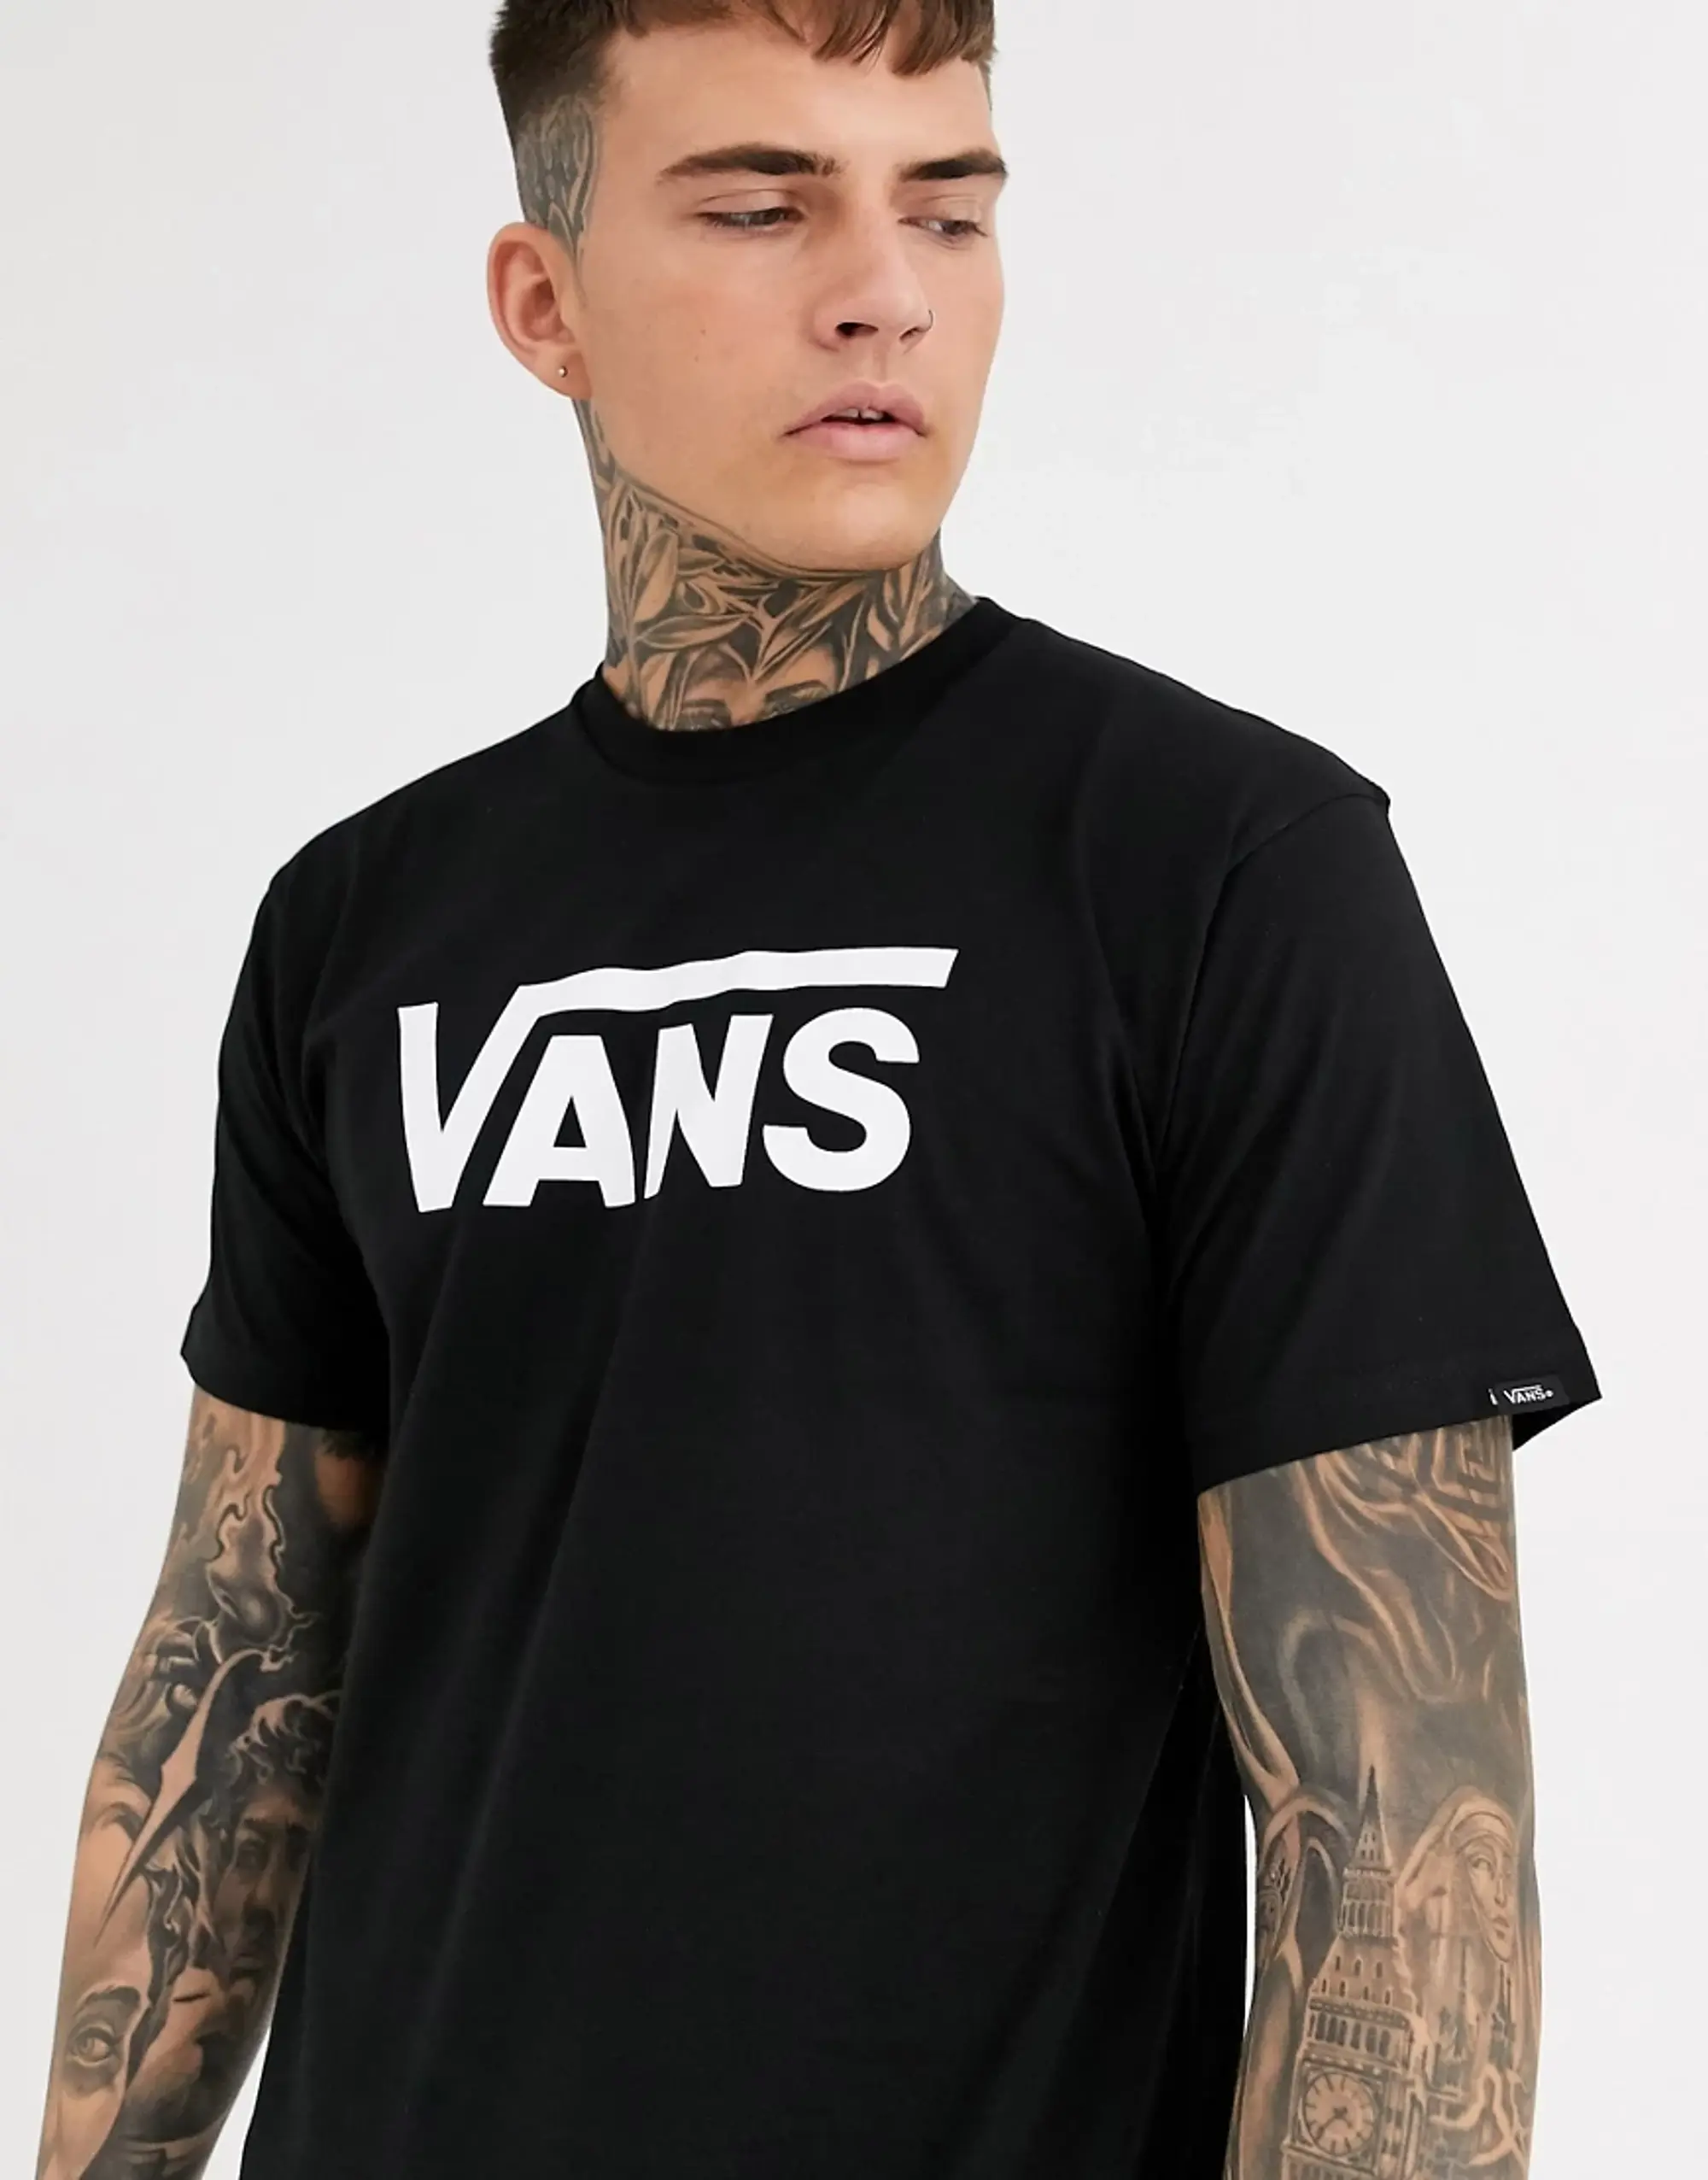 Vans Classic T-shirt - Black, Black